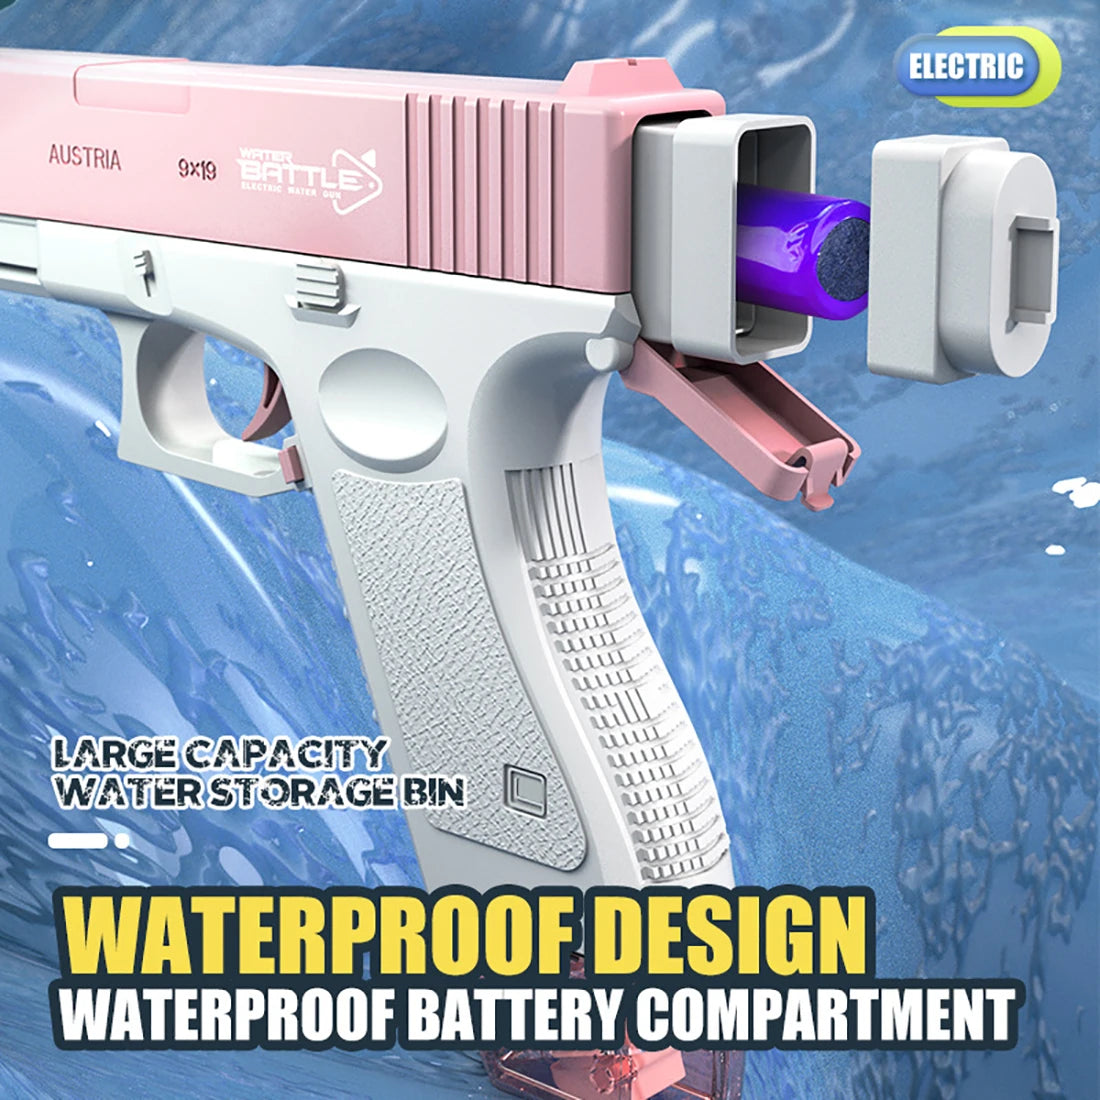 Electric Water Gun High-pressure Glock